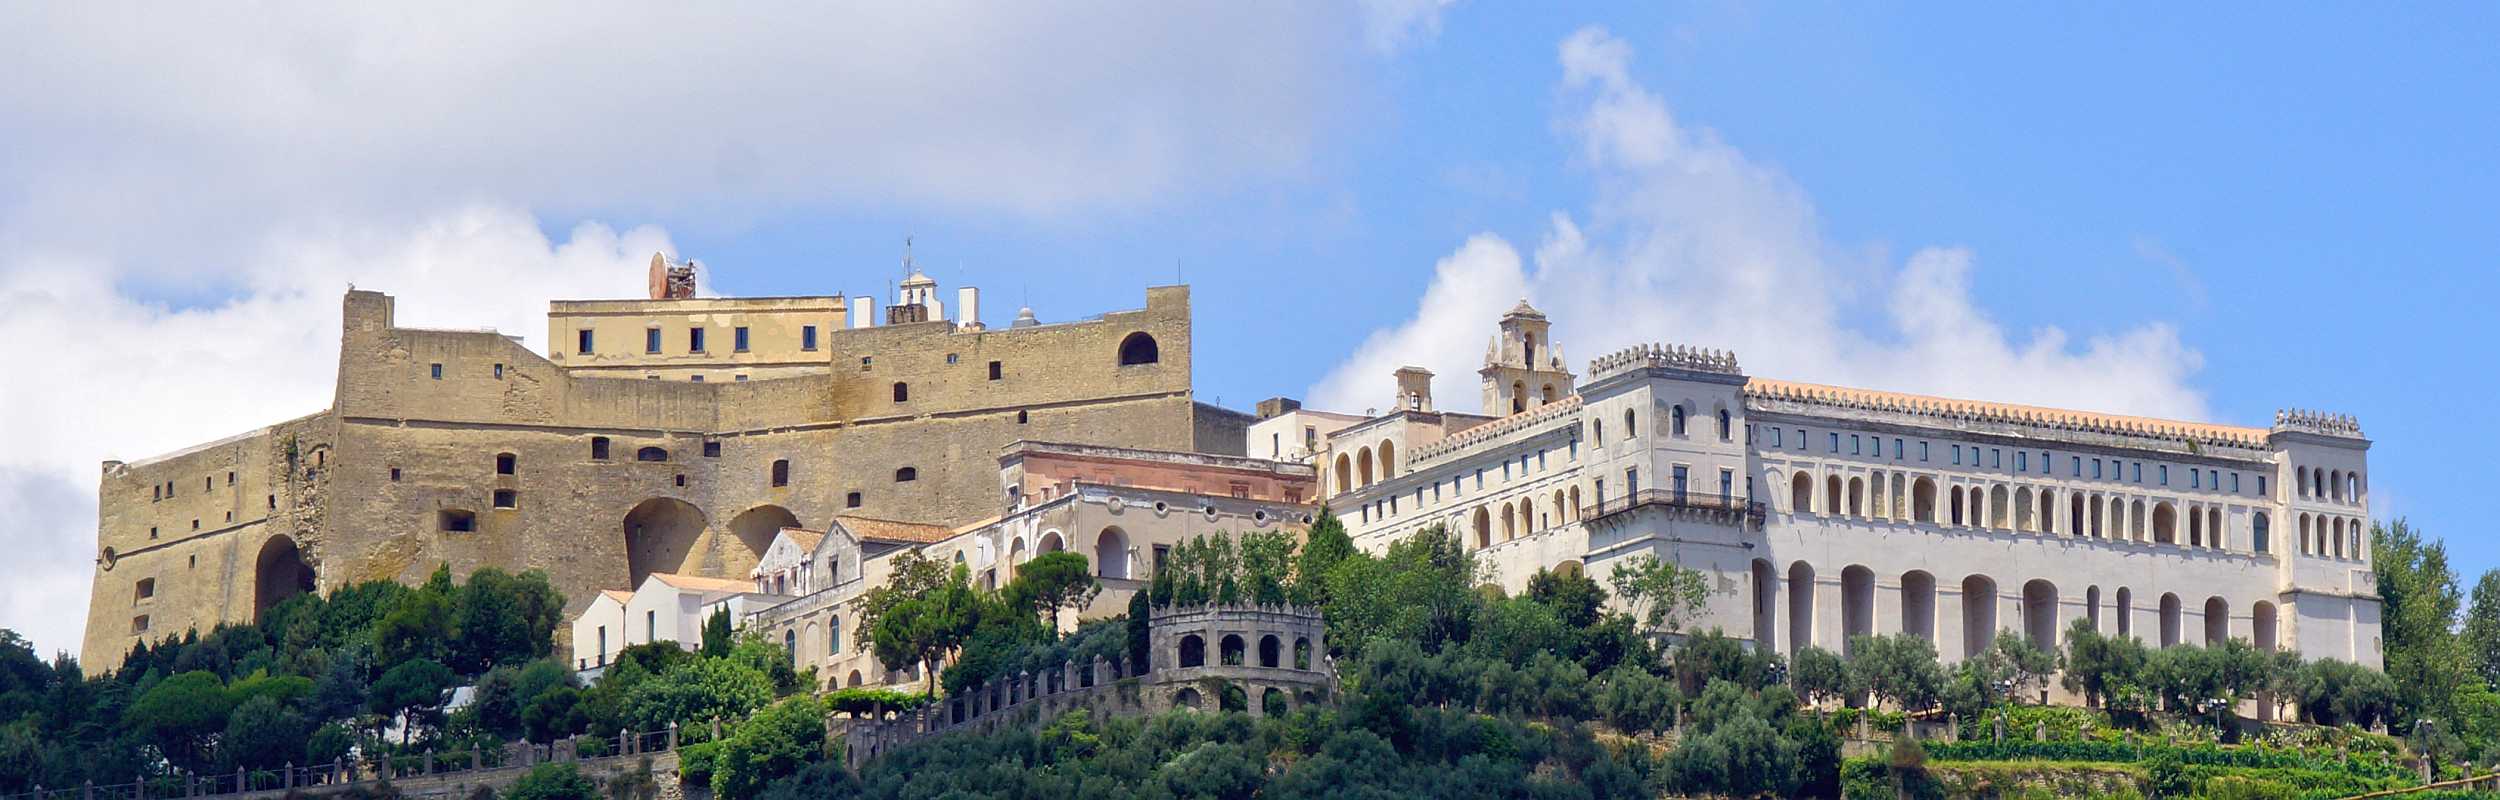 Napolicittàlibro a Castel Sant’Elmo